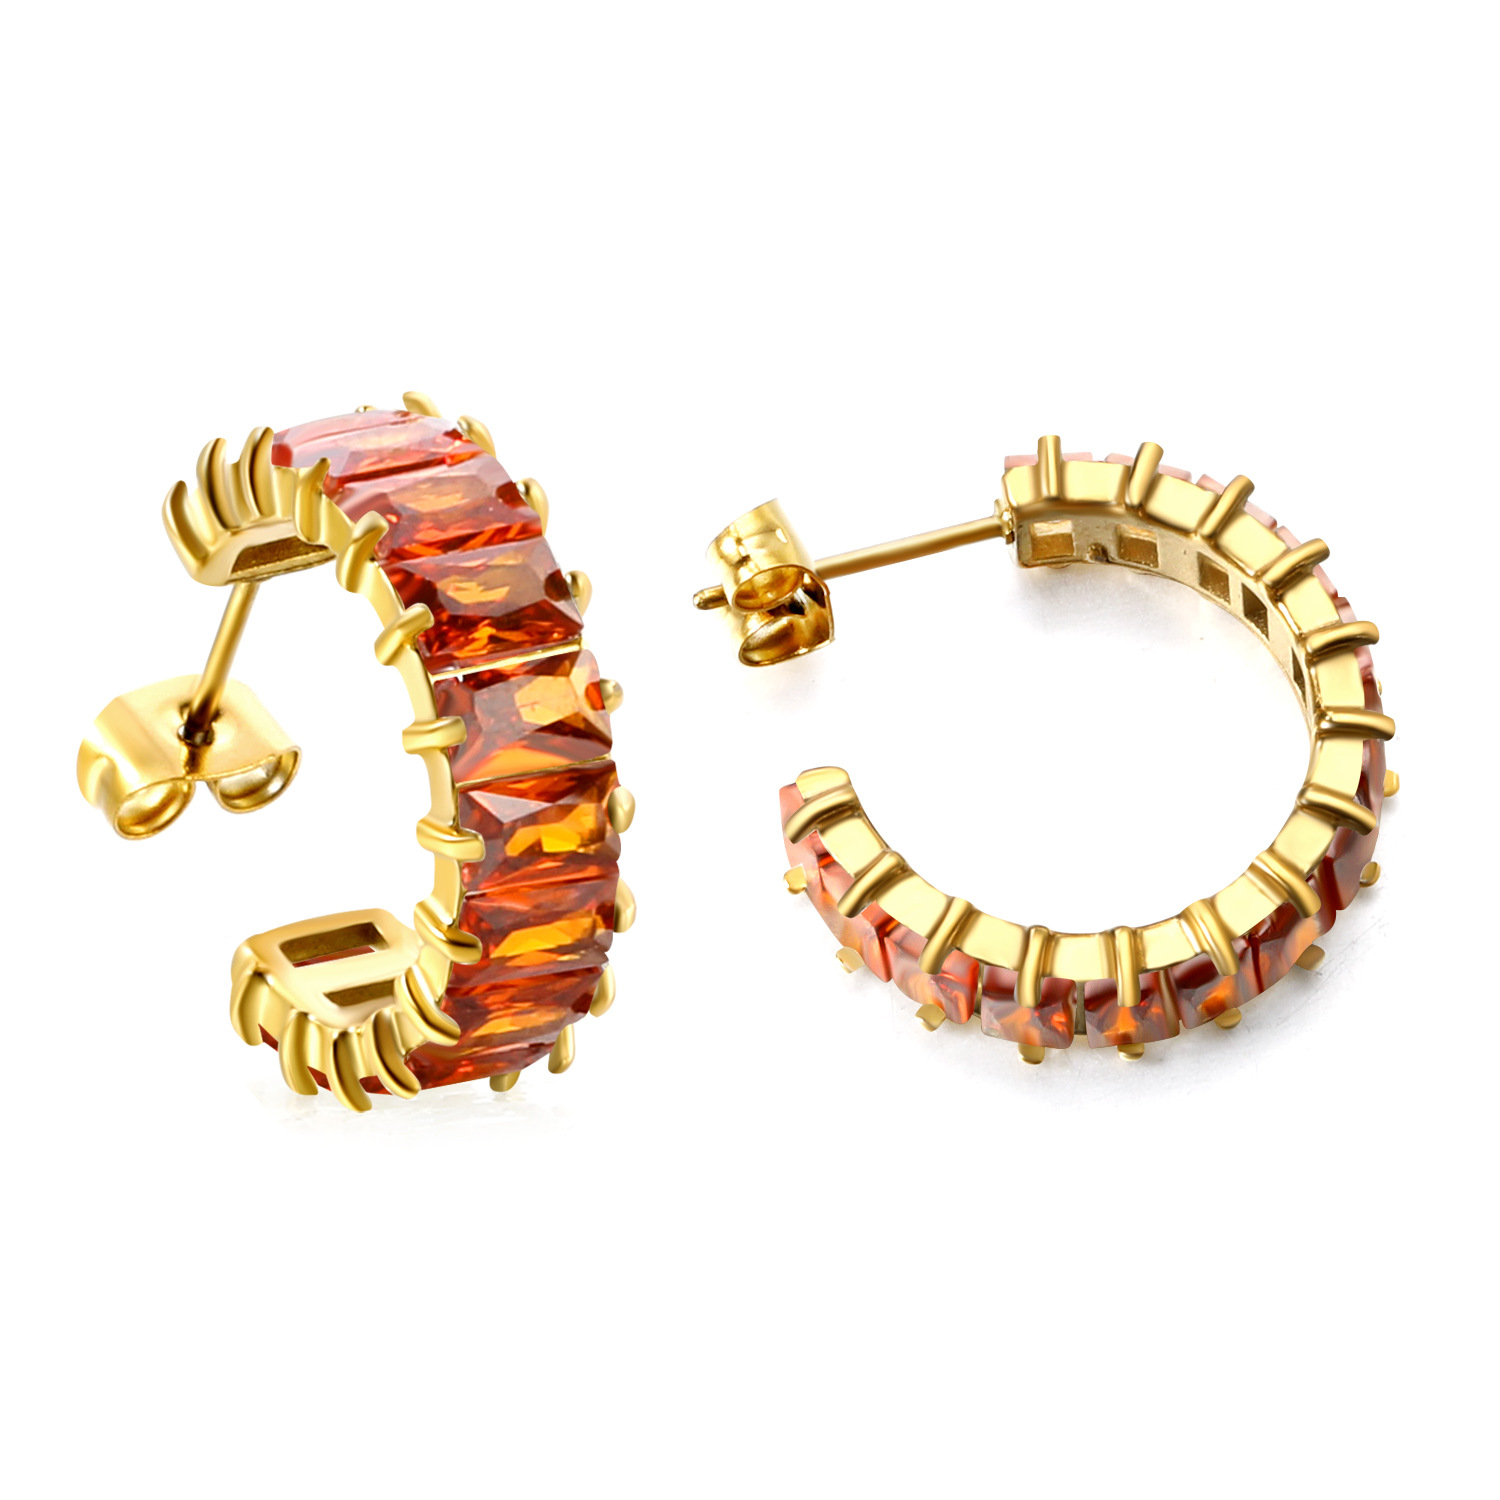 8:Orange diamond earrings, gold